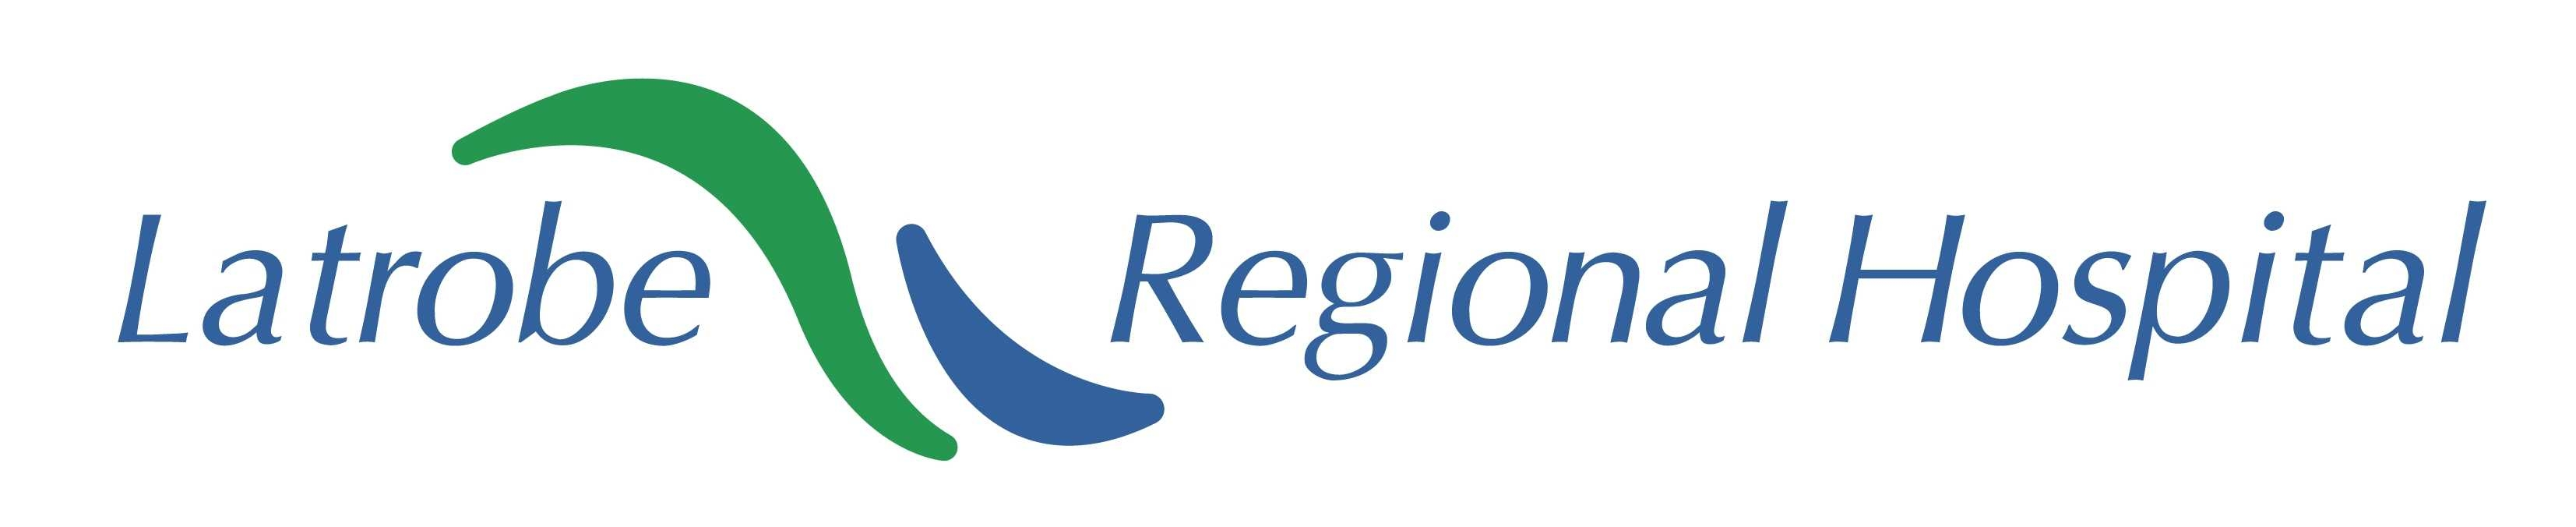 Latrobe Regional Hospital Logo